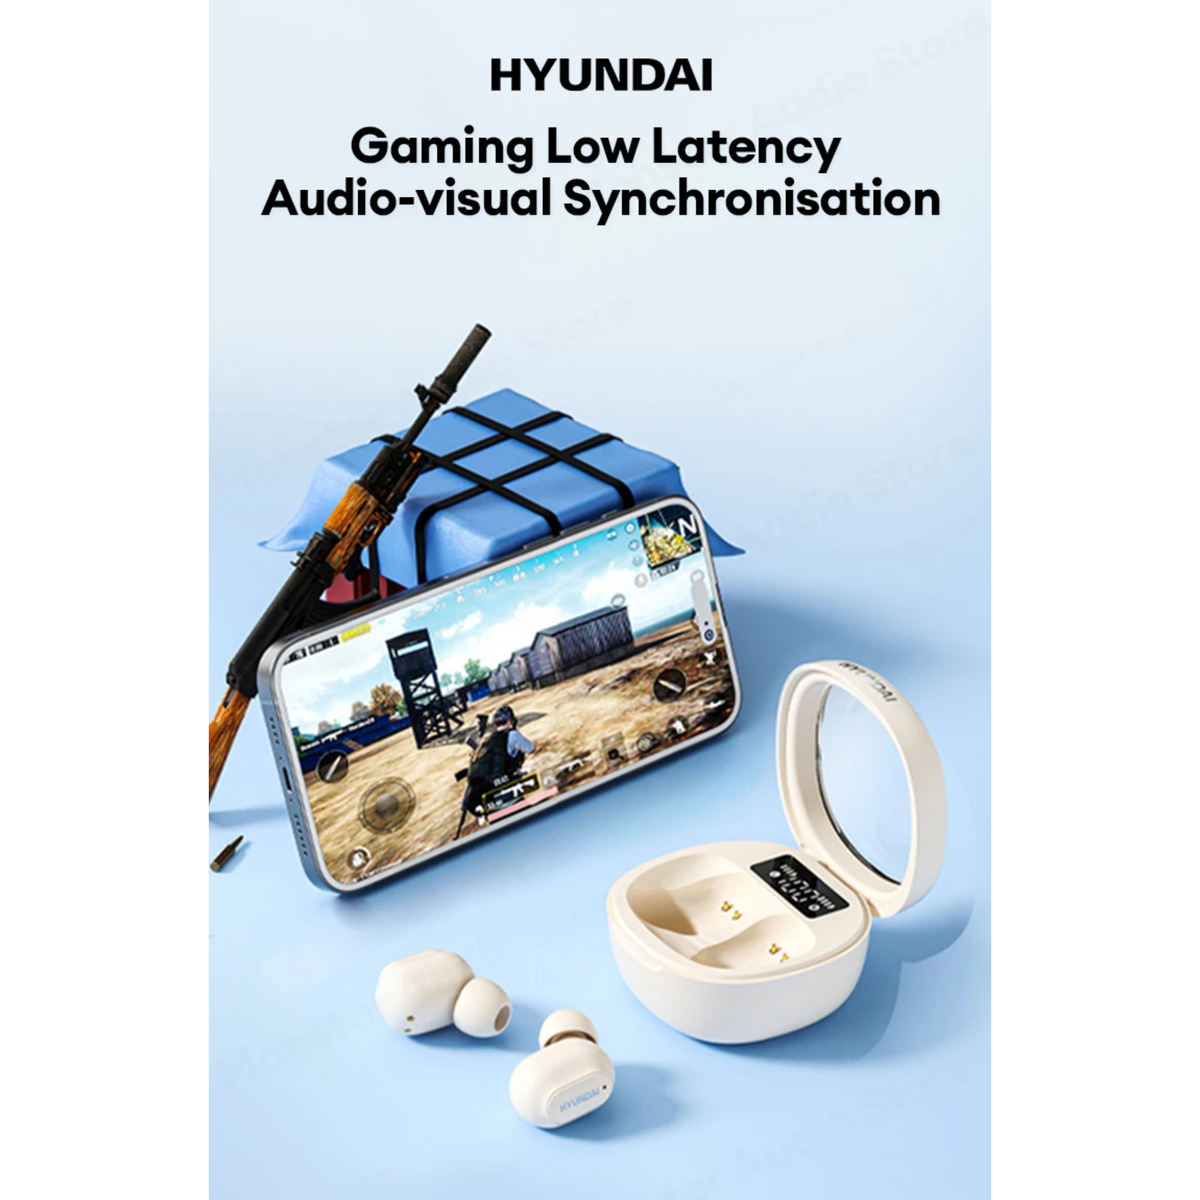 Hyundai HY-T11 True Wireless Earbuds White